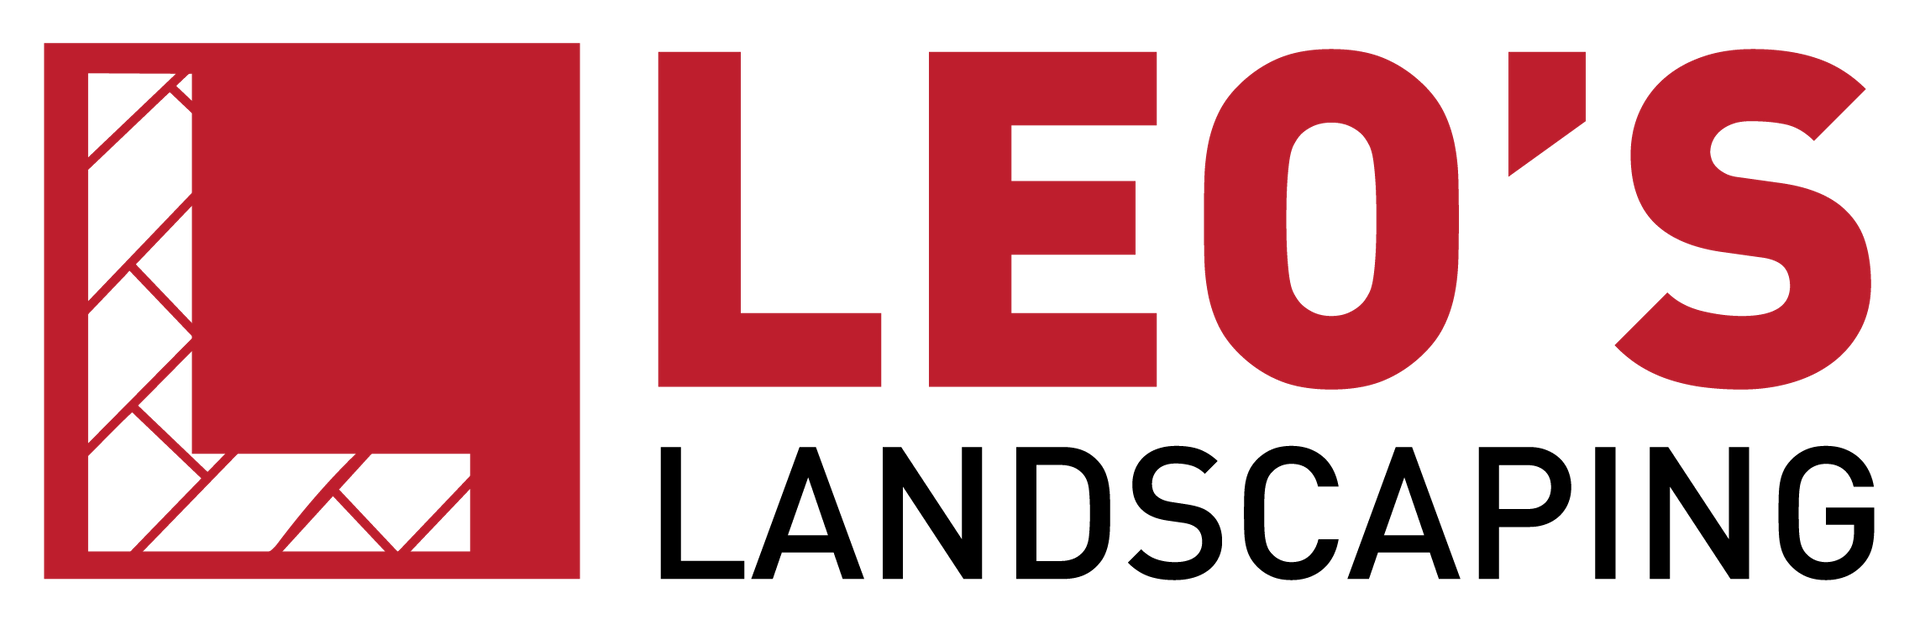 Leo's Landscaping LLC Logo